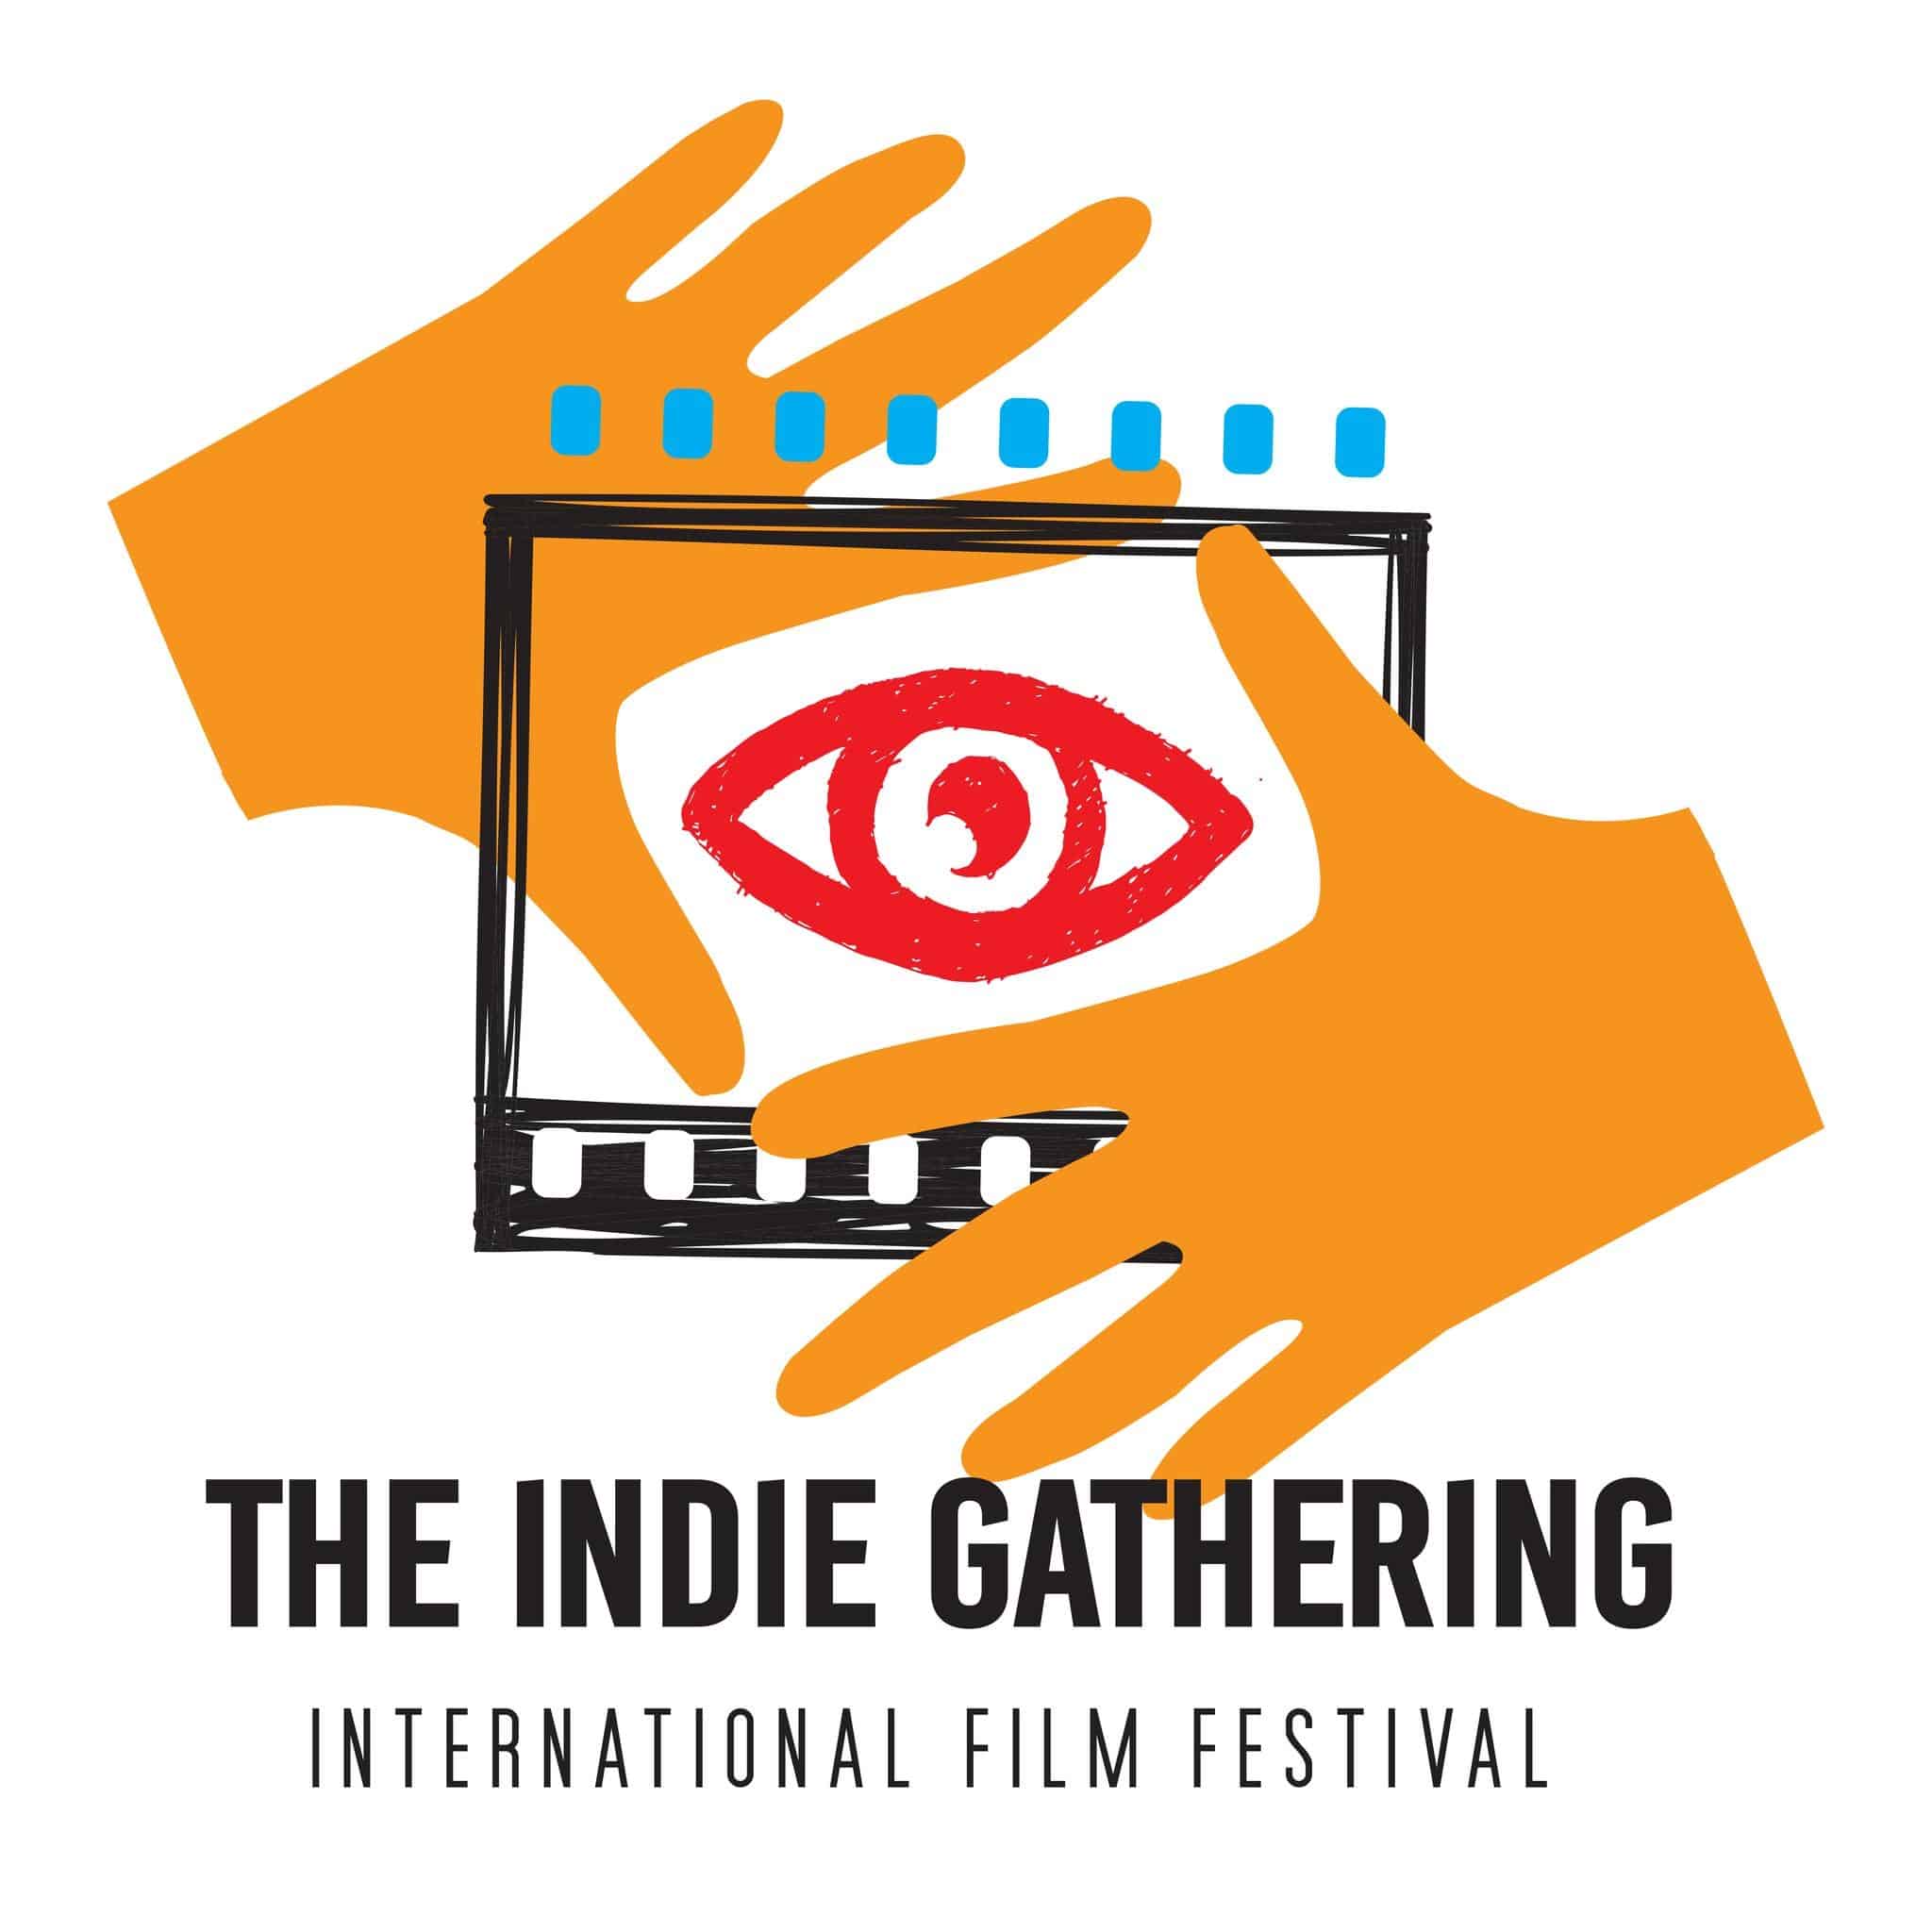 The Indie Gathering International Film Festival